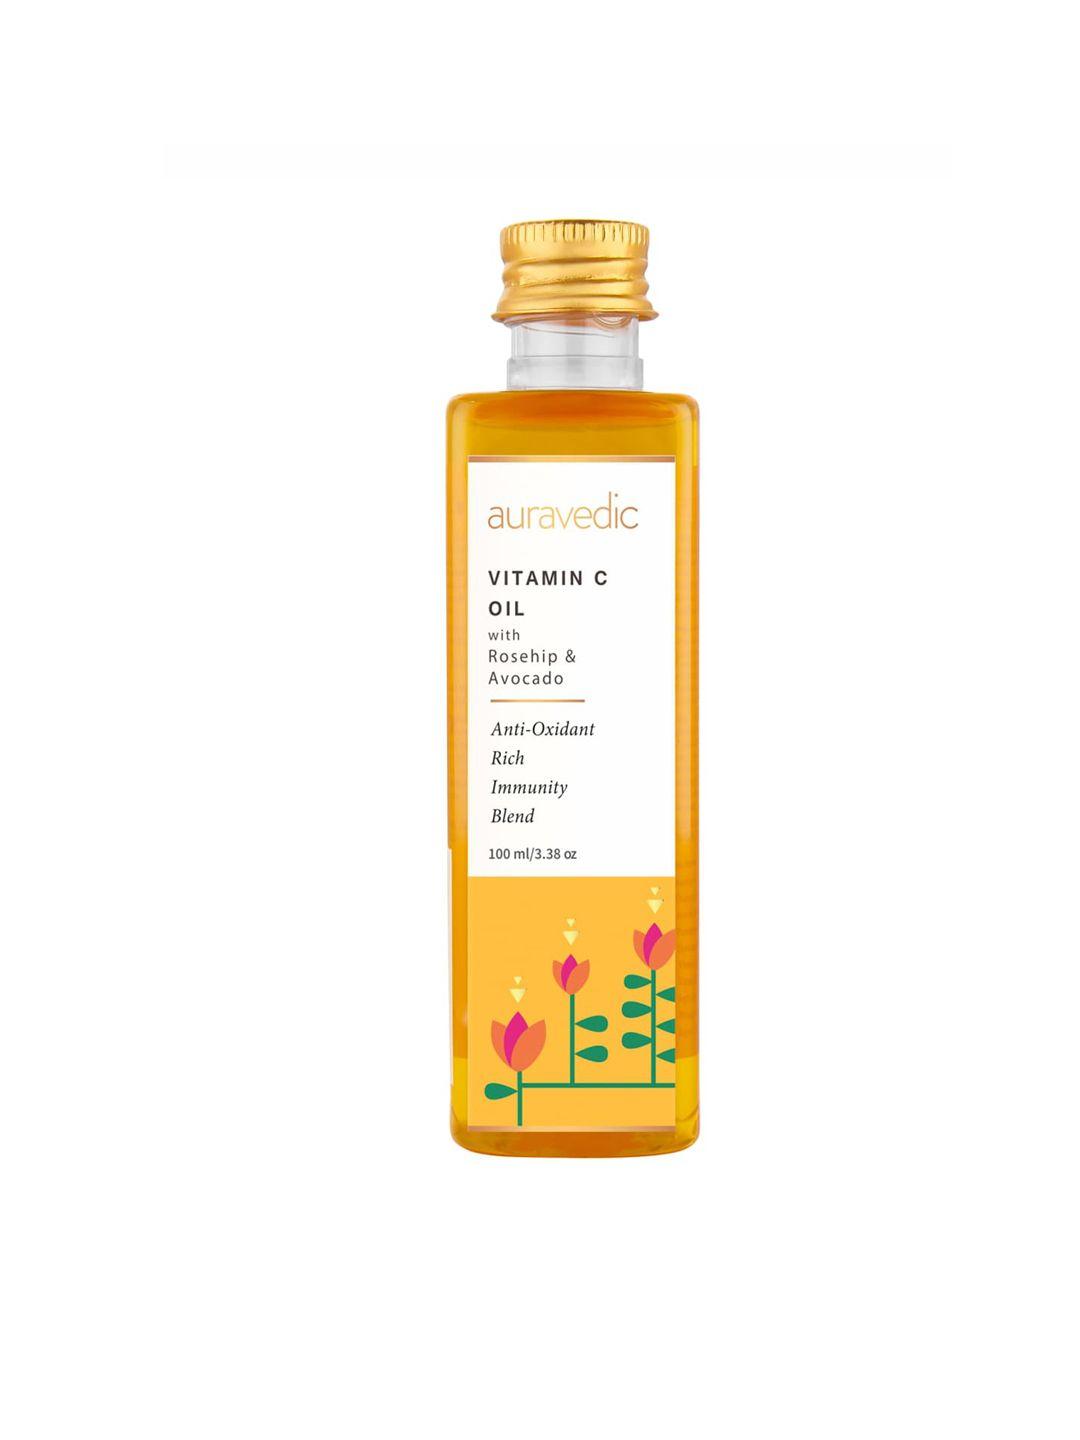 auravedic vitamin c body oil - 100ml